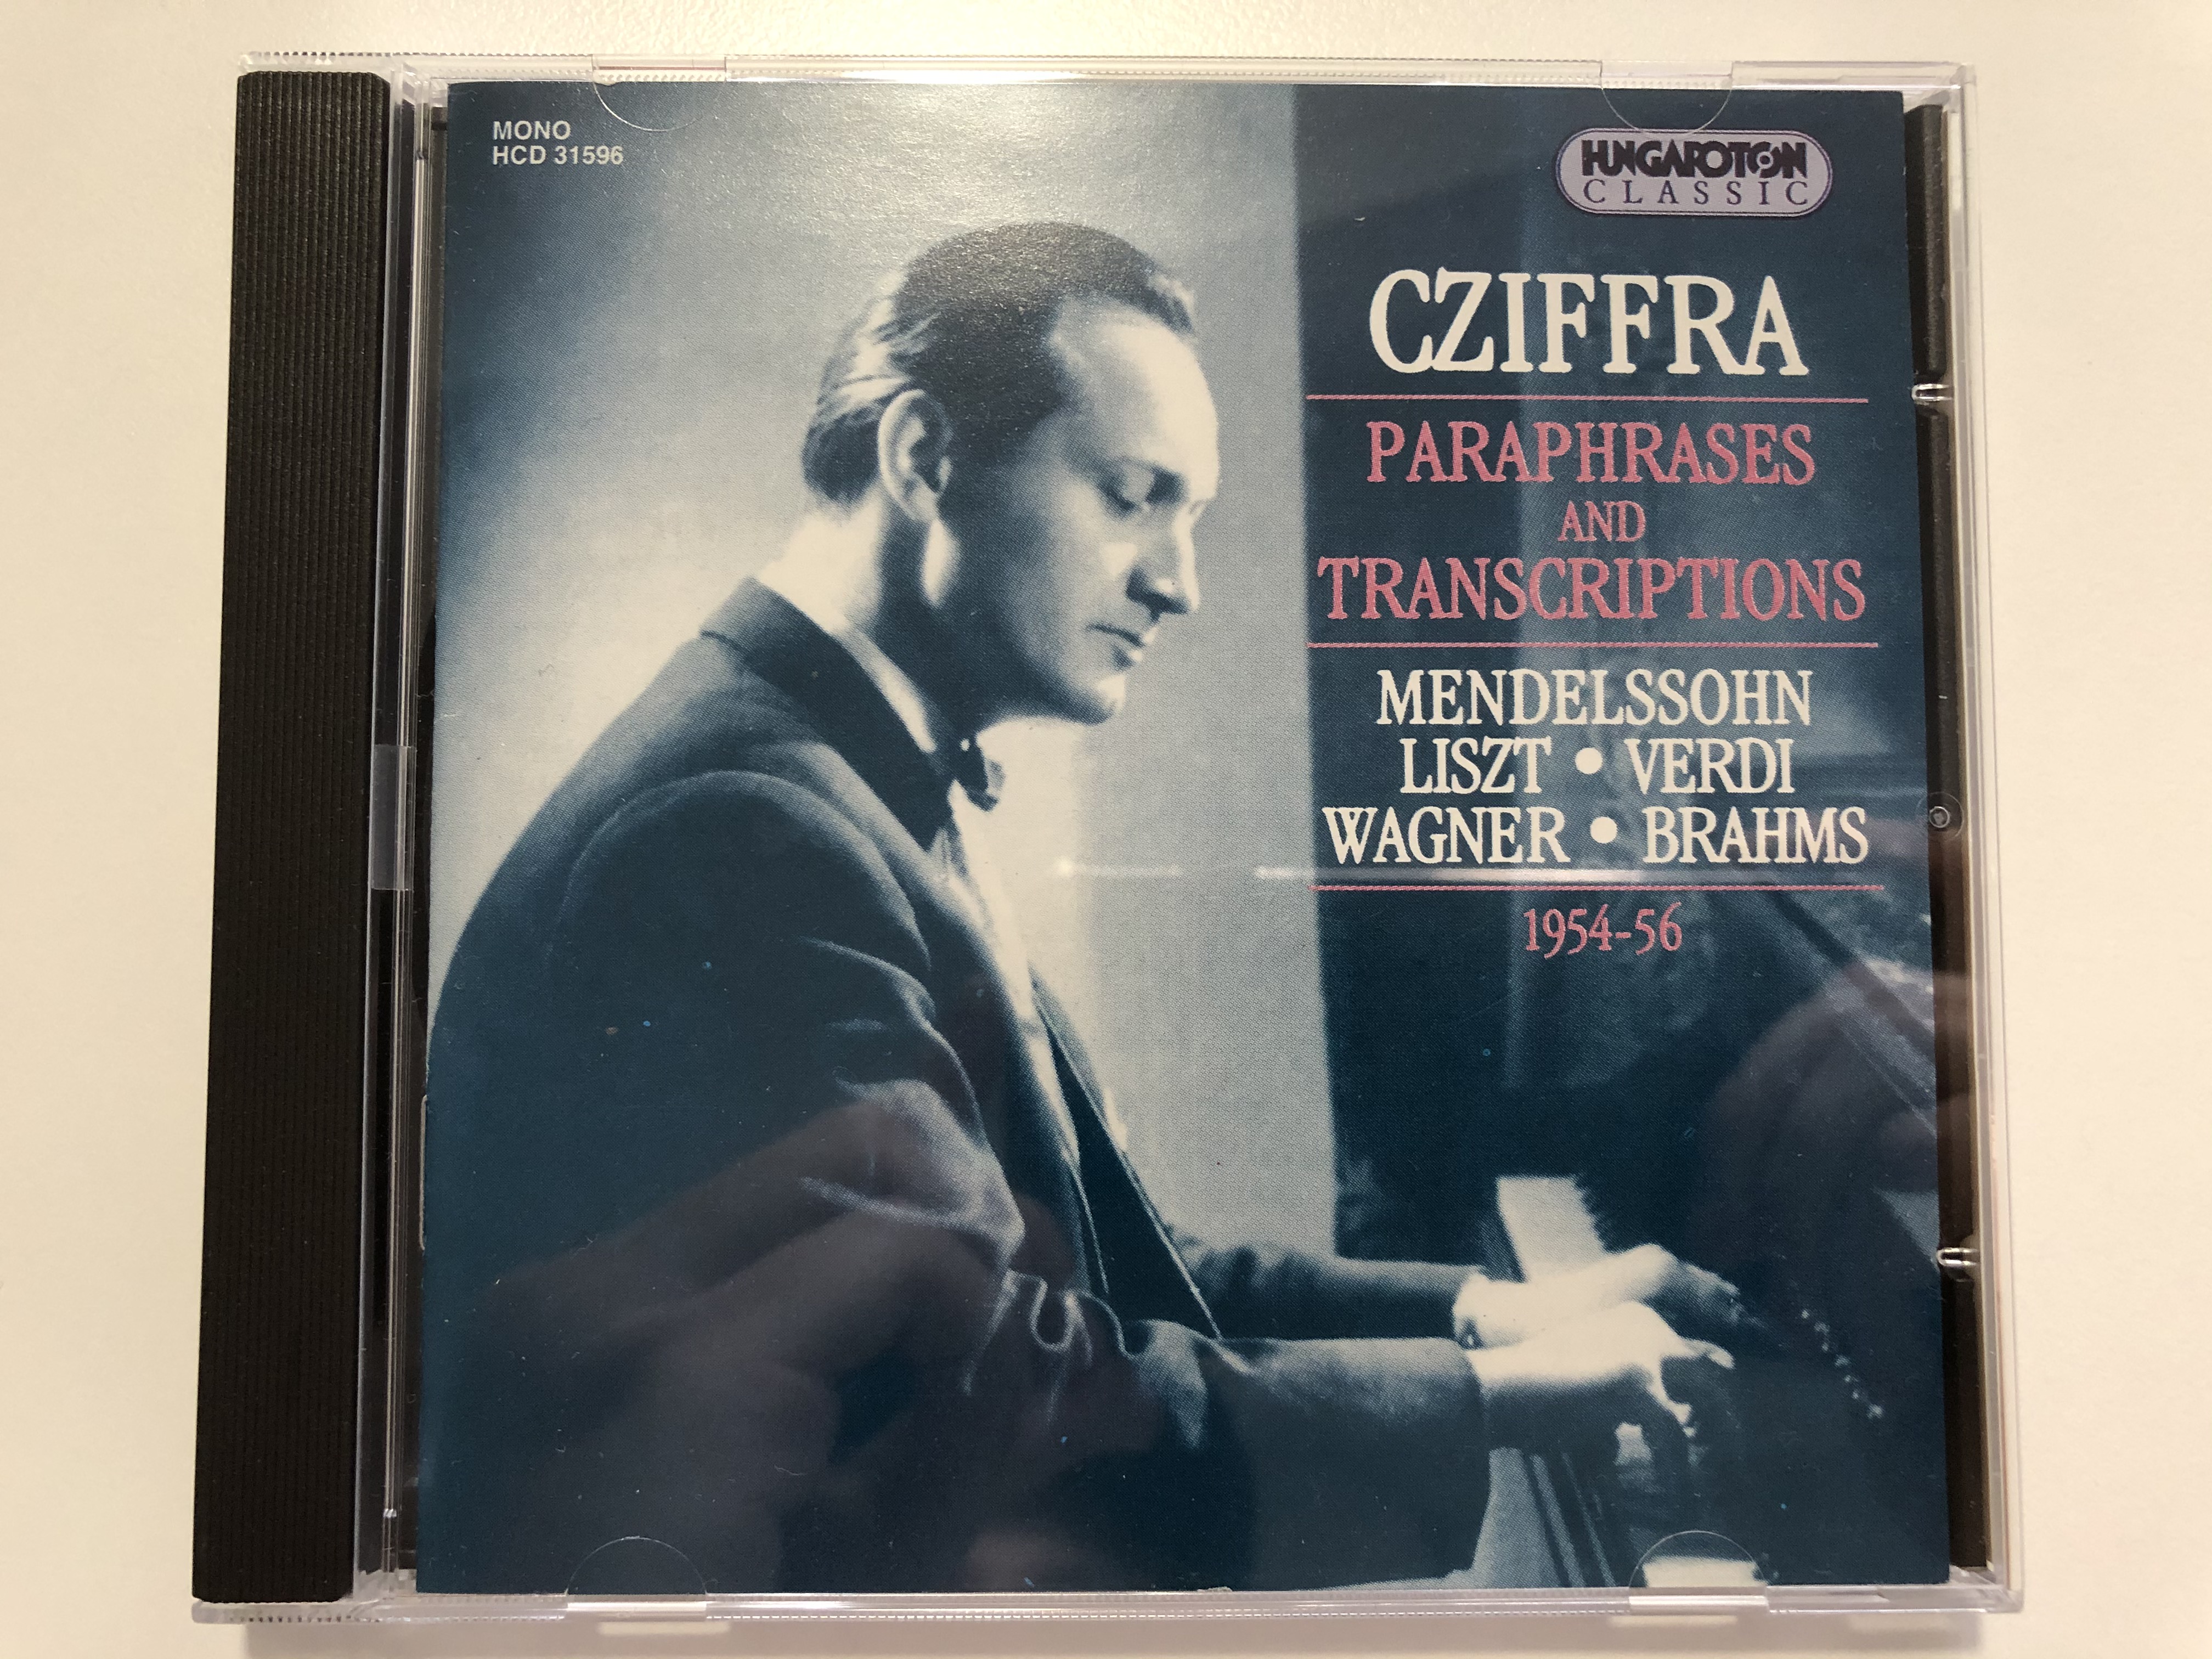 cziffra-paraphrases-and-transcriptions-mendelssohn-liszt-verdi-wagner-brahms-1954-56-hungaroton-classic-audio-cd-1995-mono-hcd-31596-1-.jpg